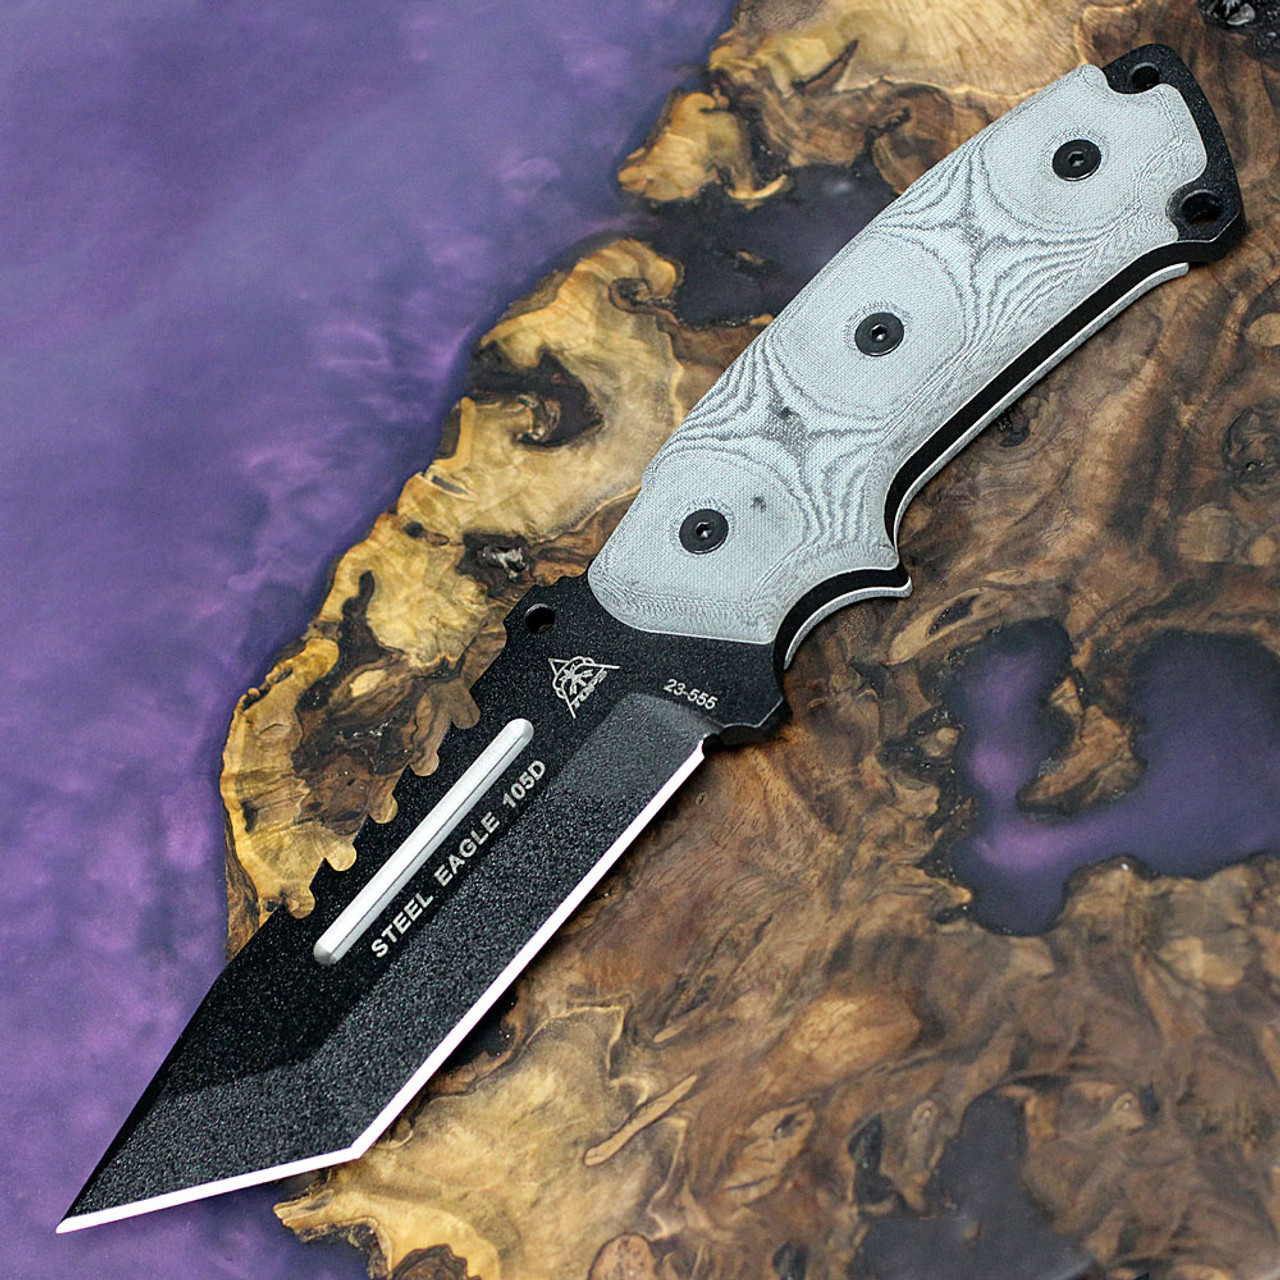 Tops Steel Eagle (TPSE105D) 5.00" 1095 Black Tanto Blade with Saw Teeth, Black Linen Micarta Handle